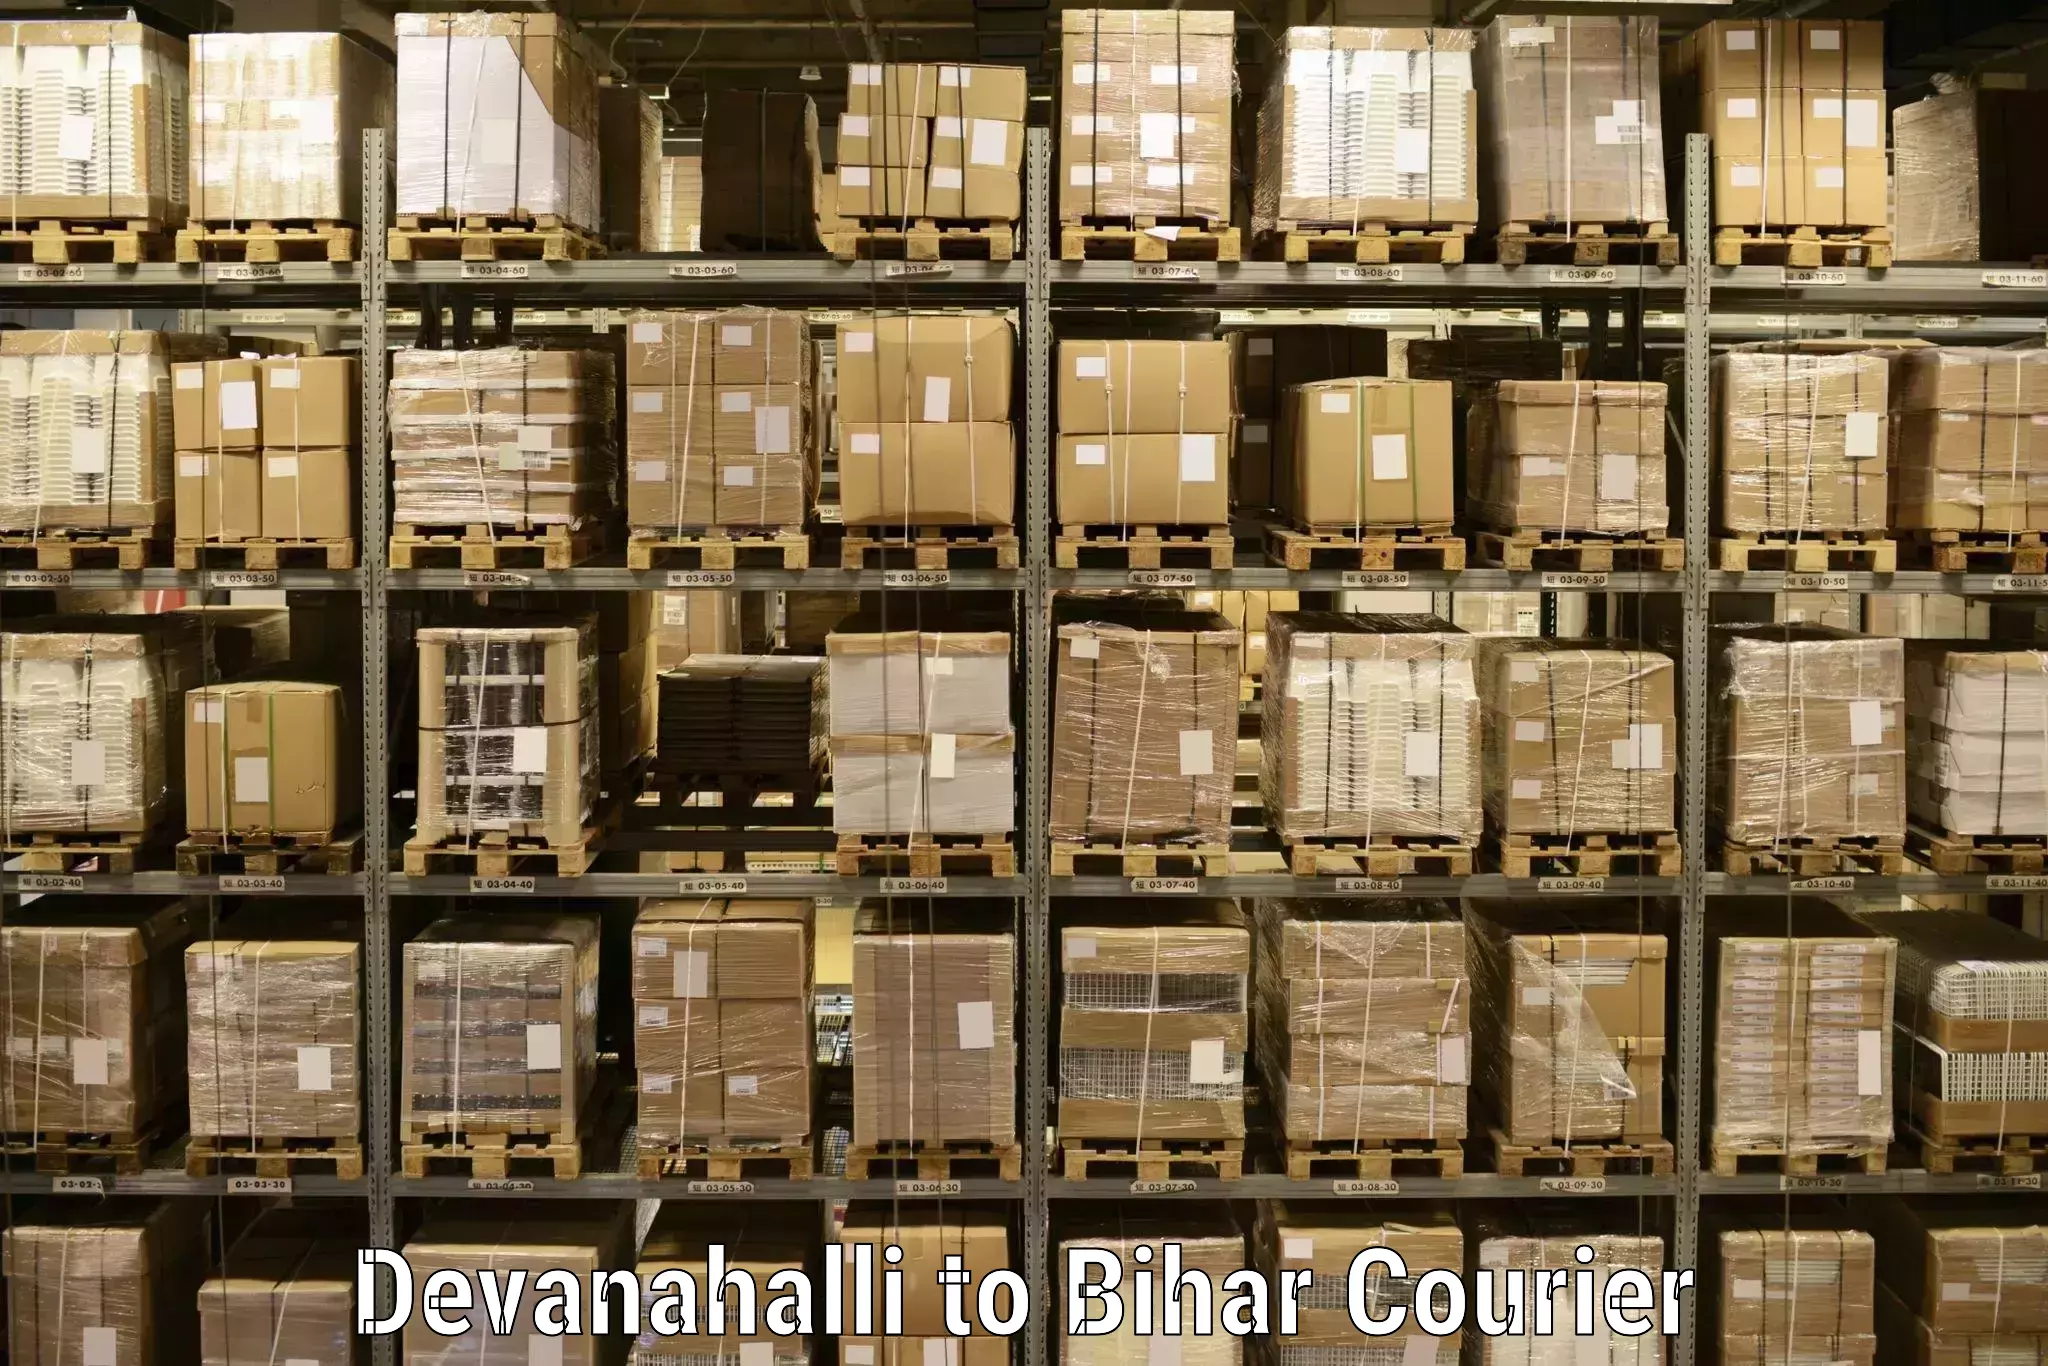 24/7 courier service in Devanahalli to Tekari